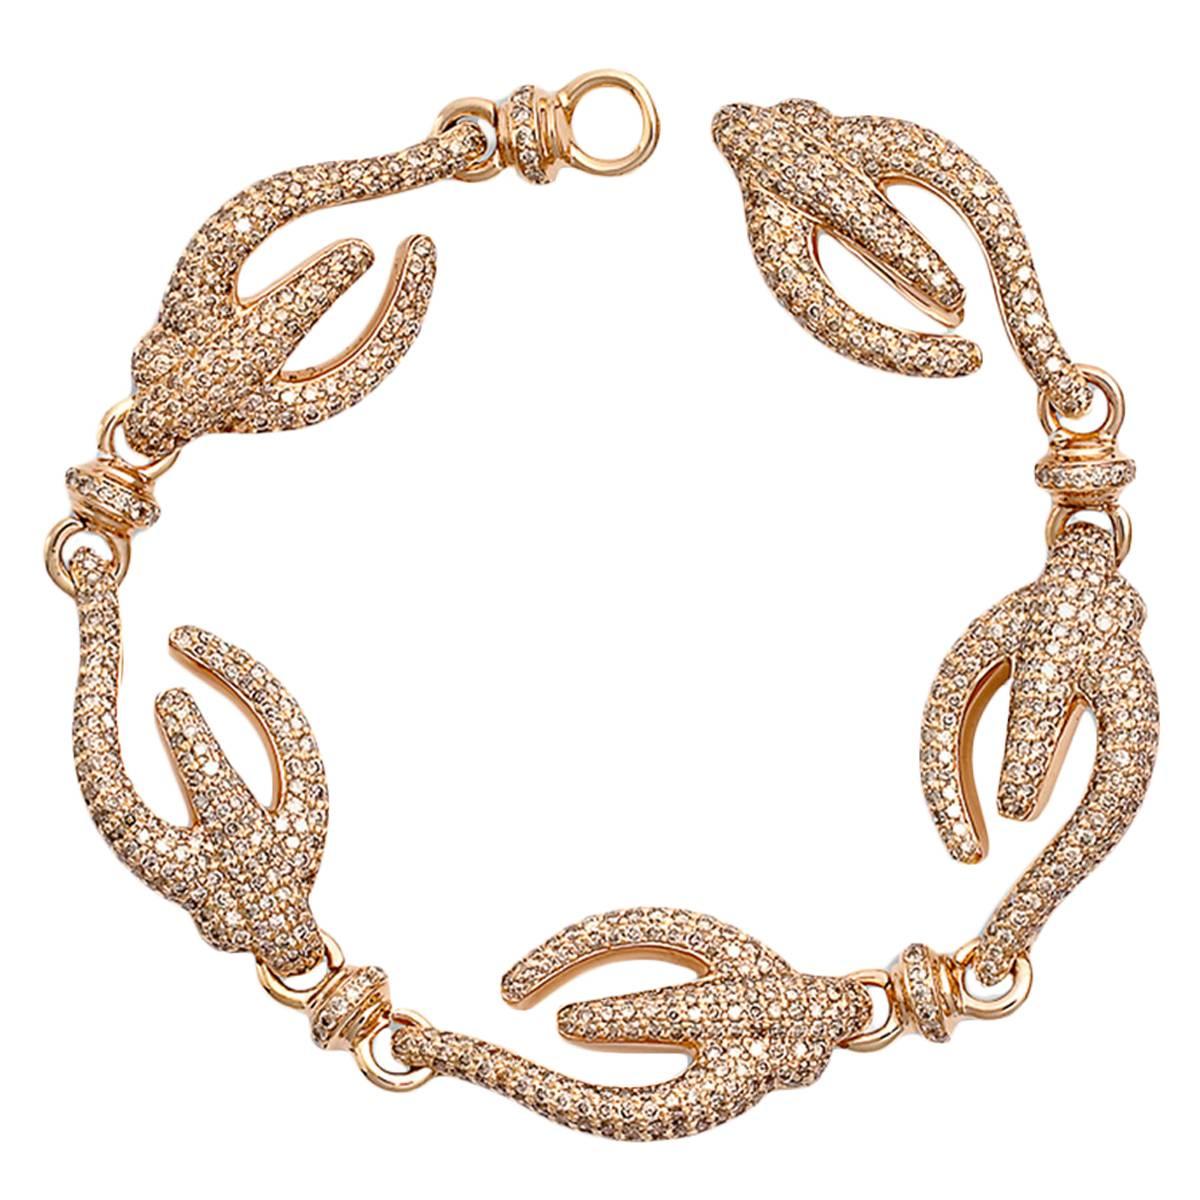 Colleen B. Rosenblat brilliant cut diamond gold bracelet